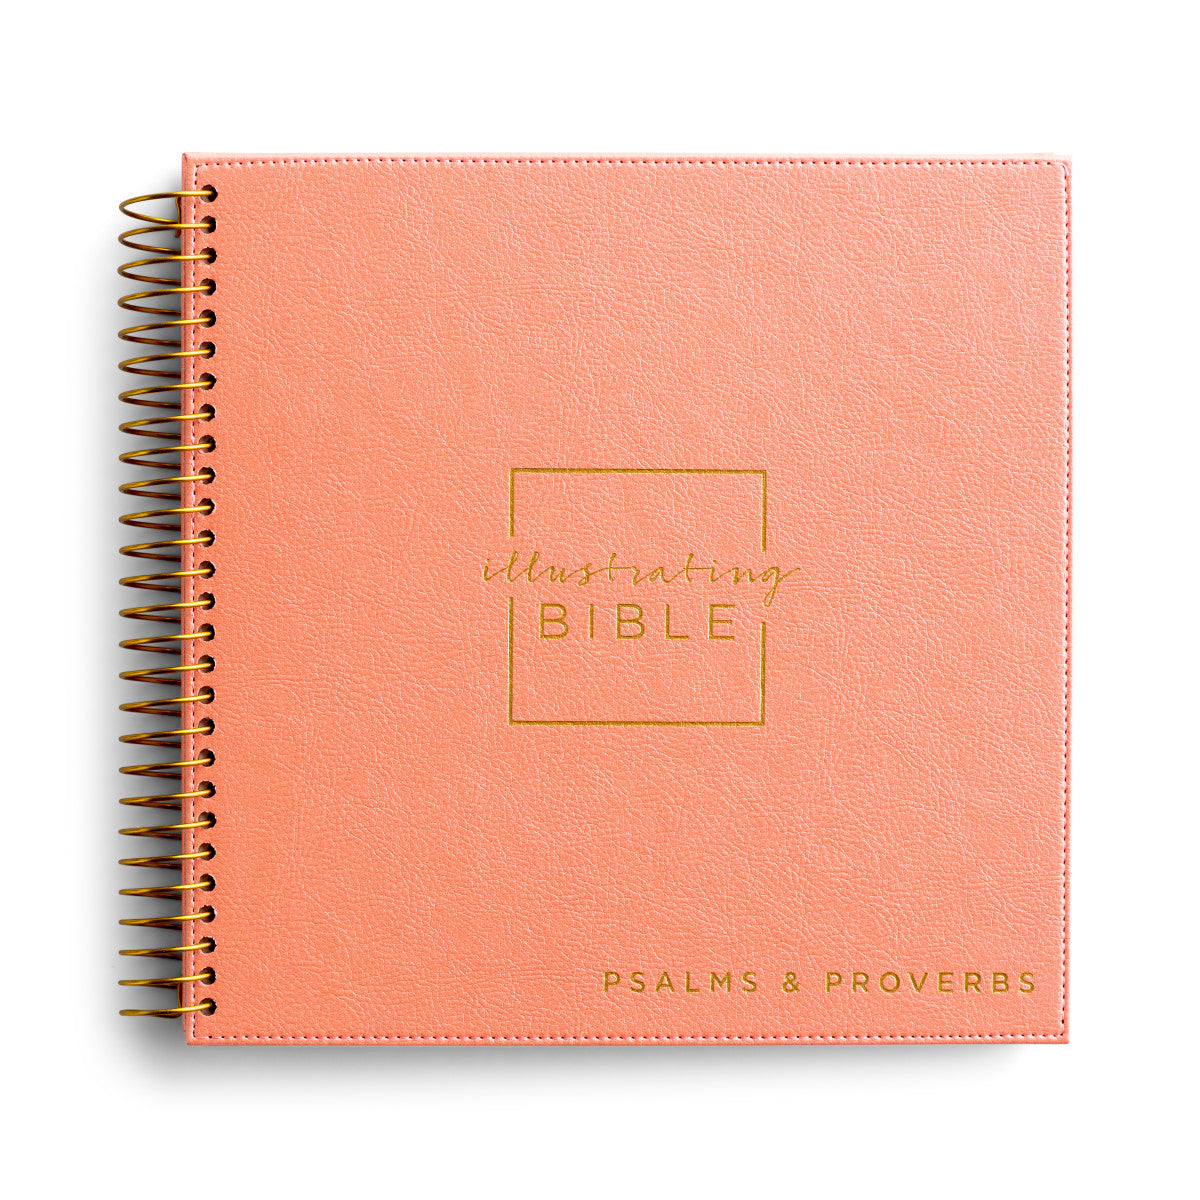 NIV - Illustrating Bible - Psalms & Proverbs - The Christian Gift Company